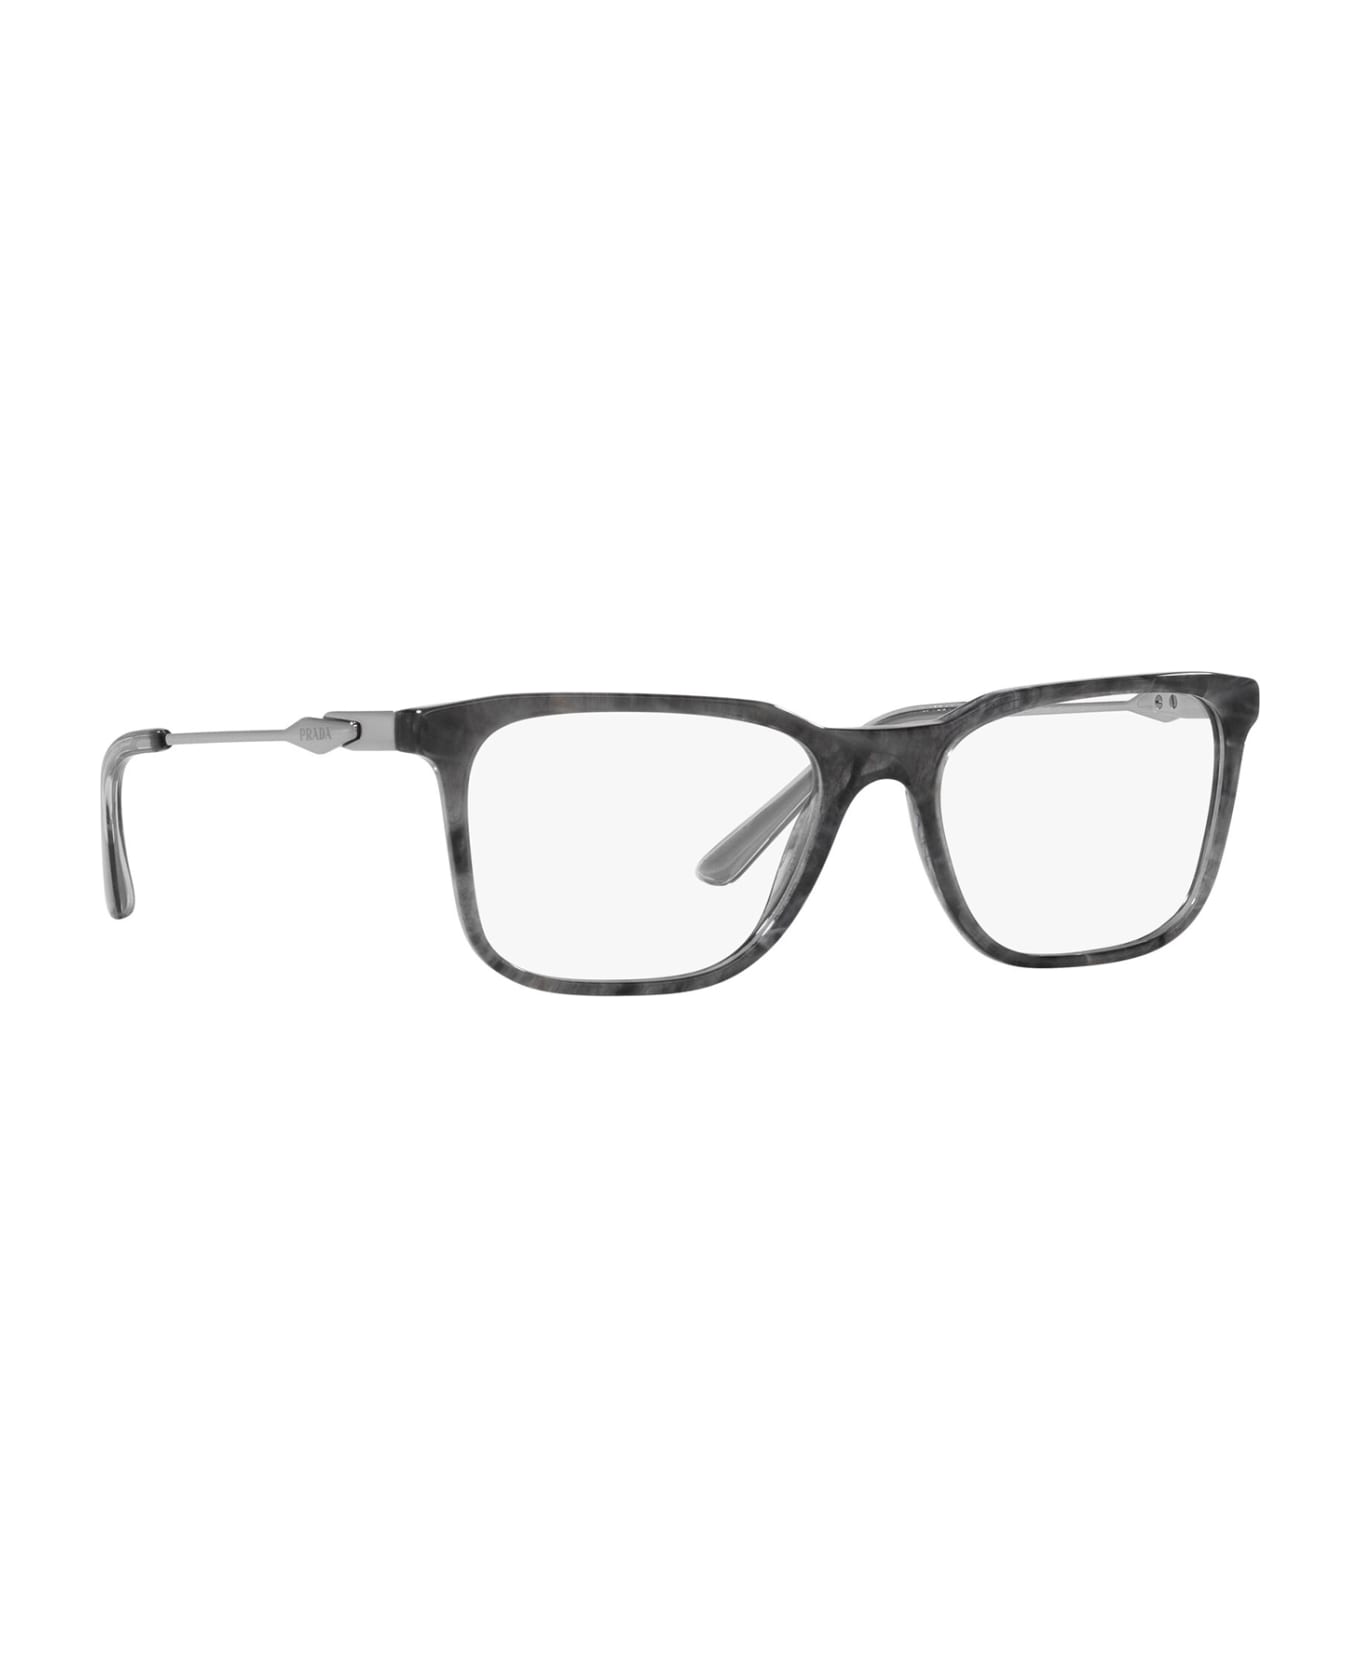 Prada Eyewear Pr 05zv Graphite Stone Glasses - Graphite Stone アイウェア